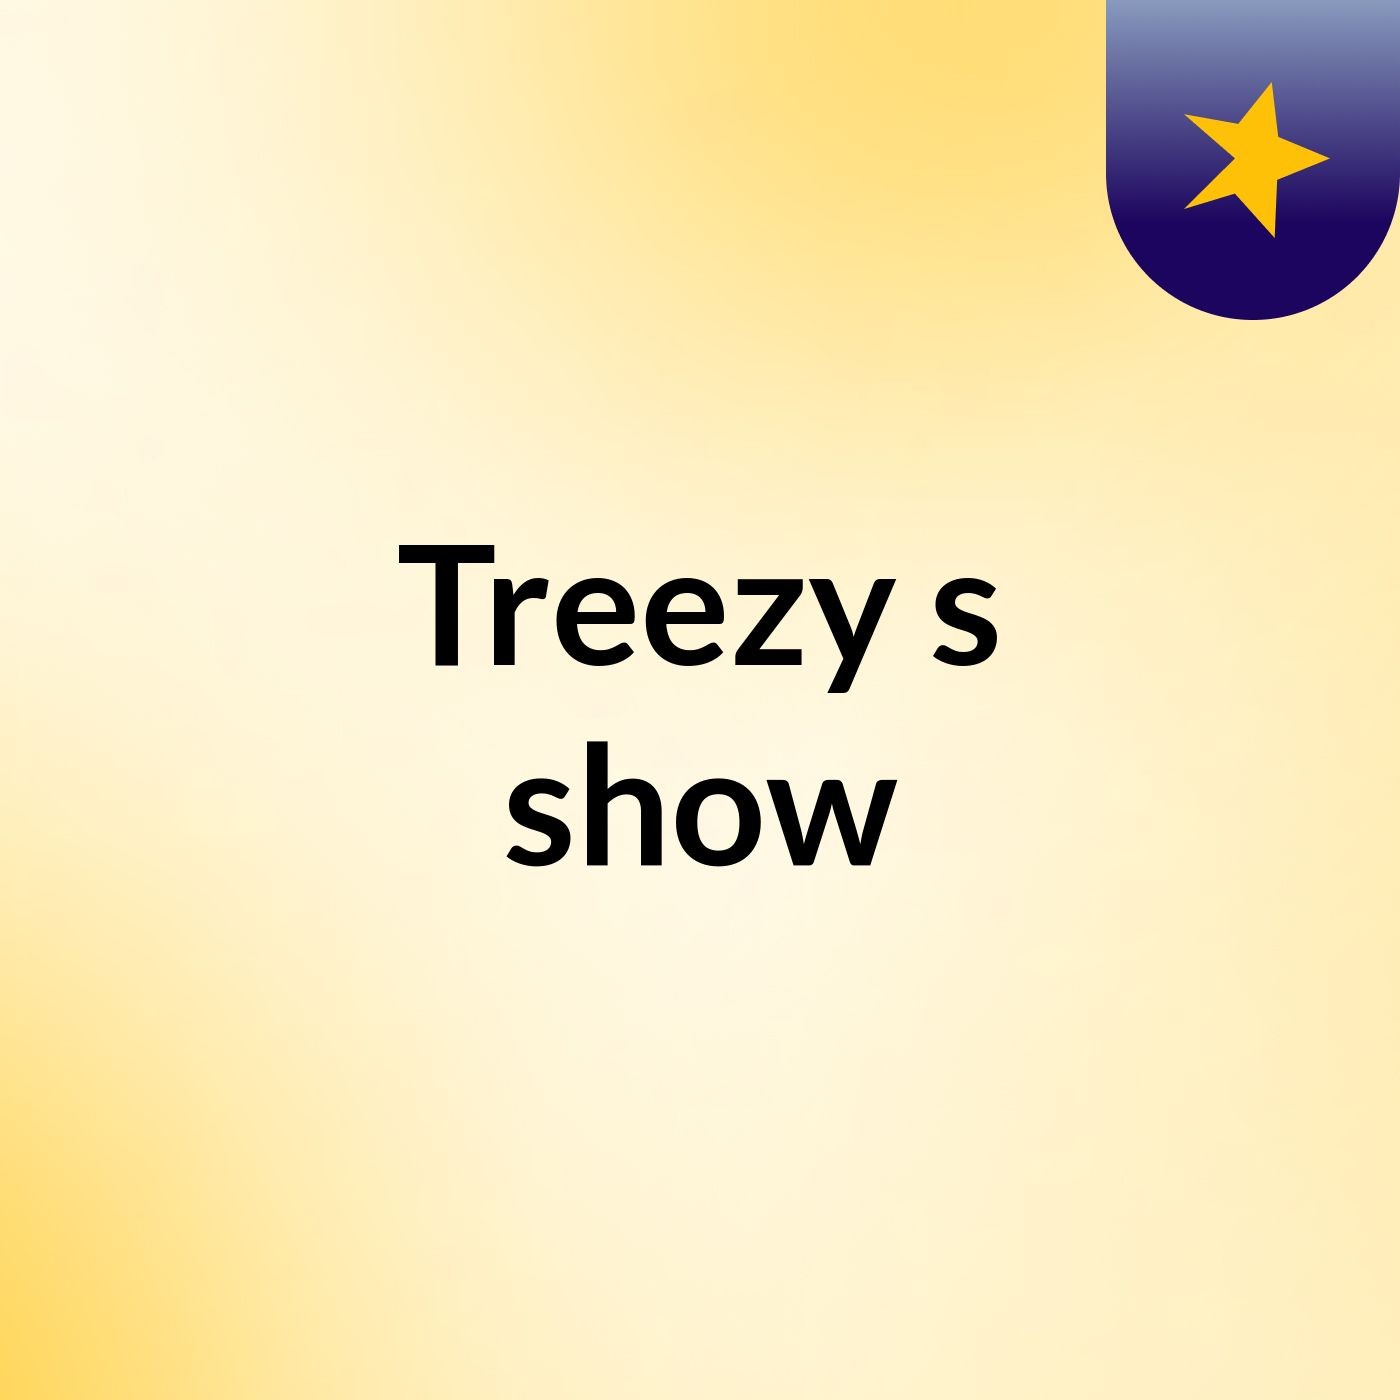 Treezy's show